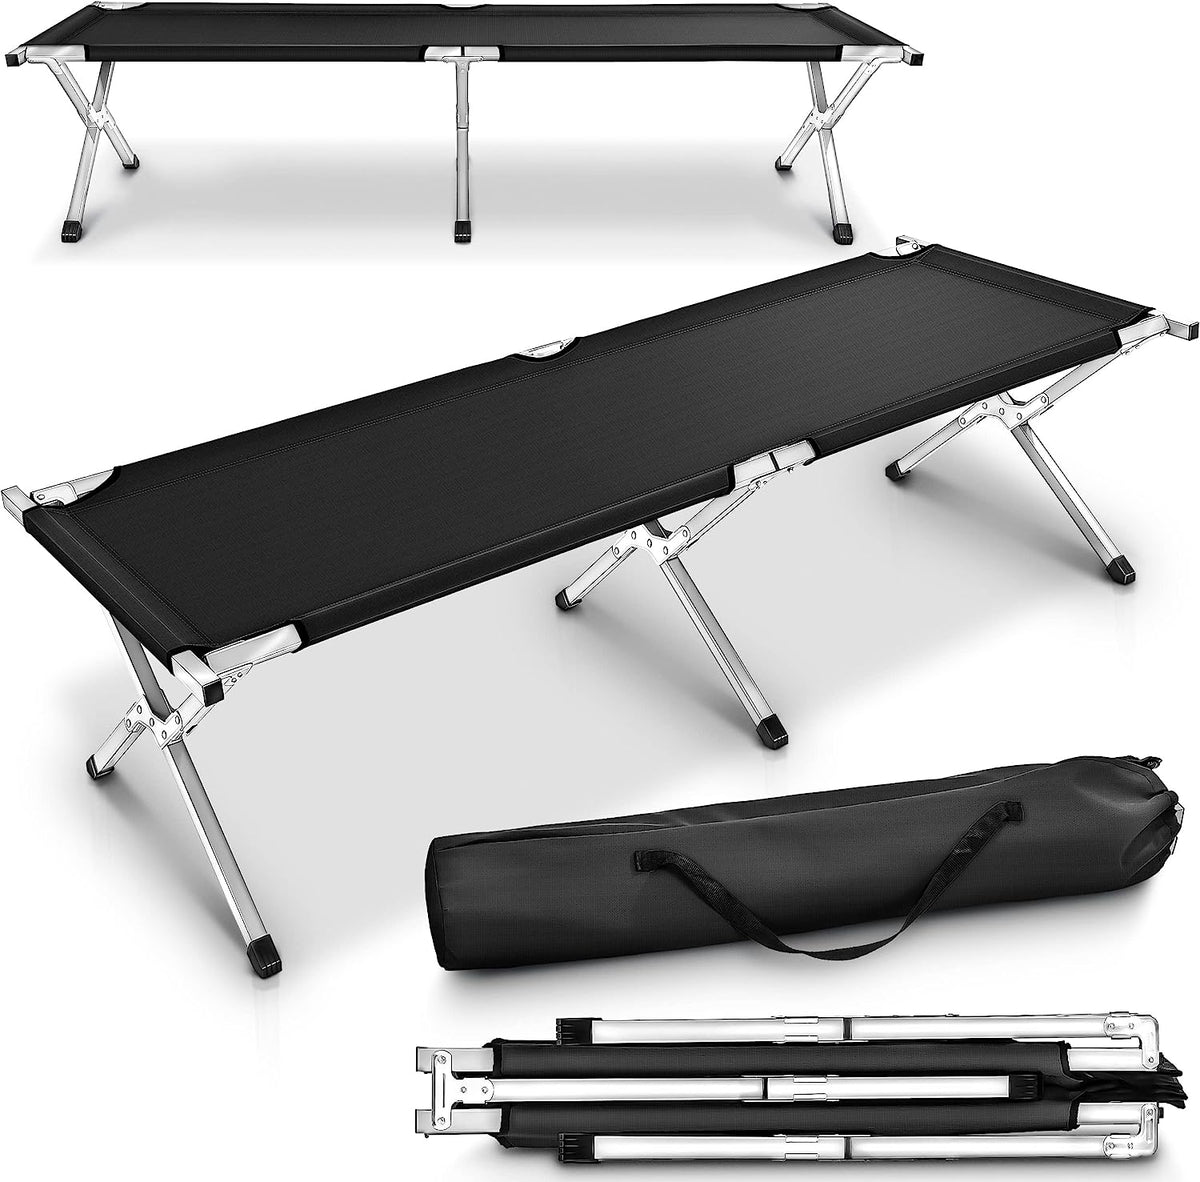 TRESKO XXL Camping Bed - Sturdy Metal Frame, 210 x 72 x 45 cm, 150kg Capacity